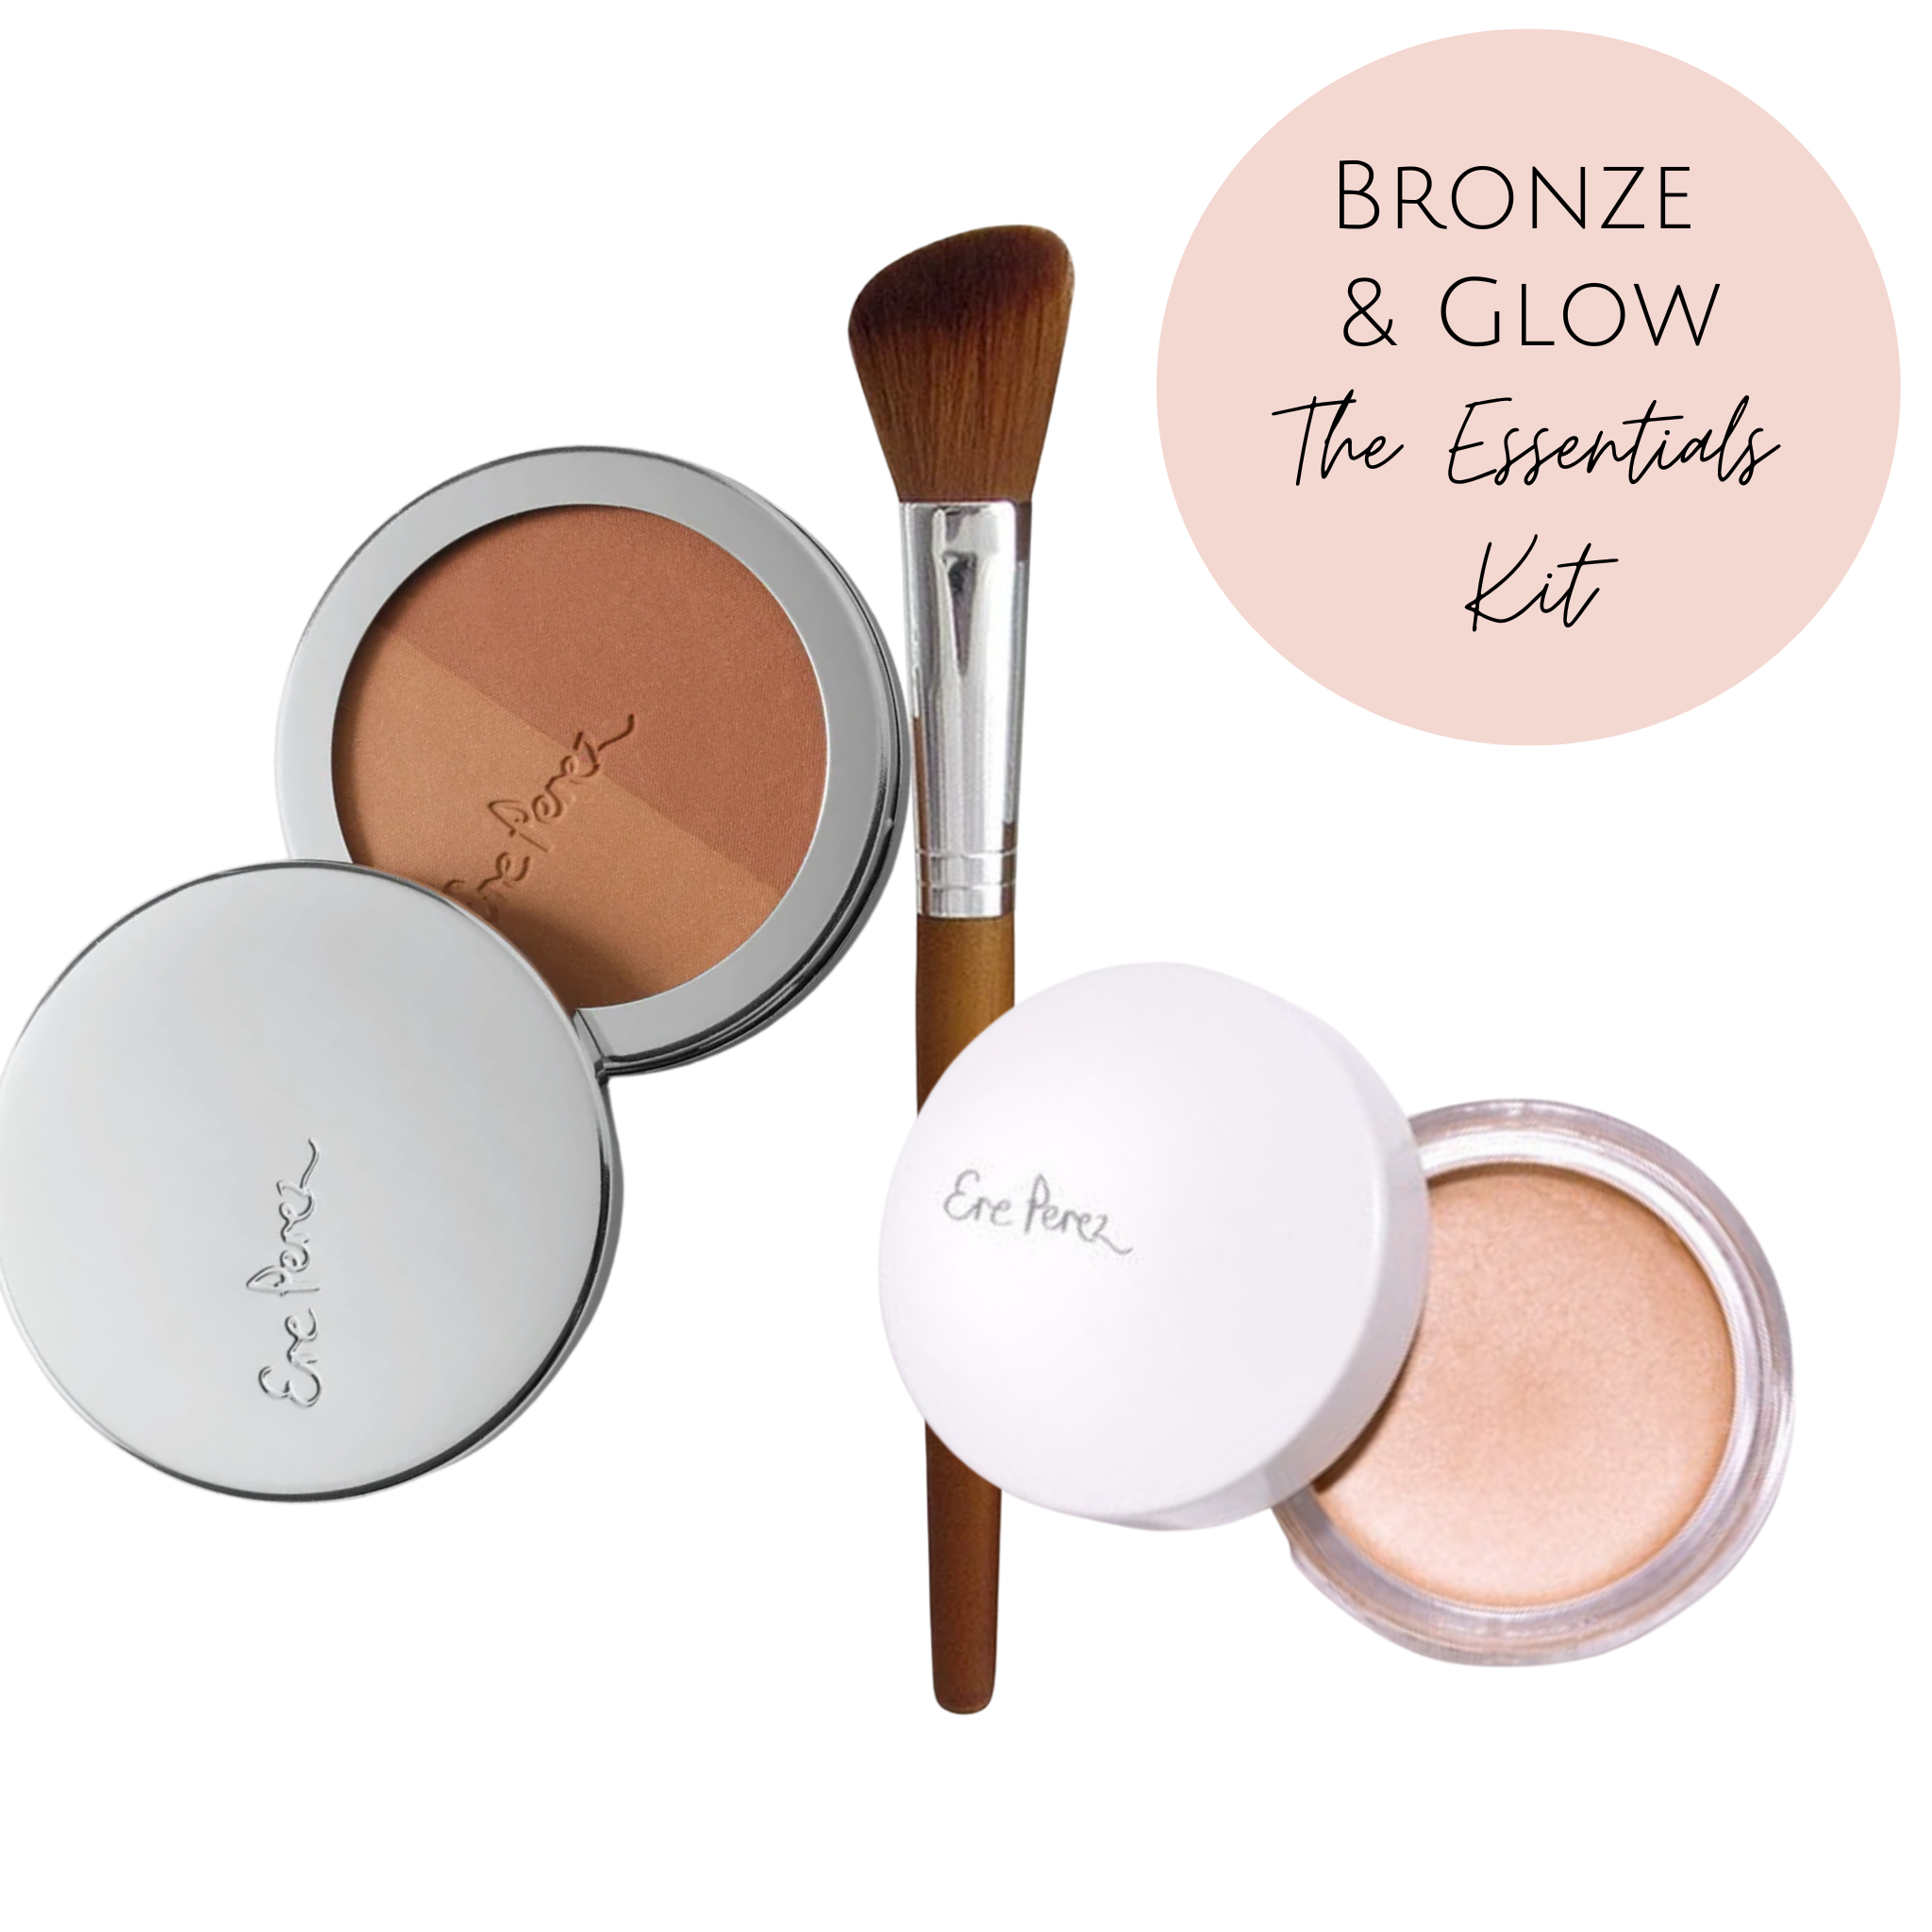 Bronze + Glow Essentials Kit